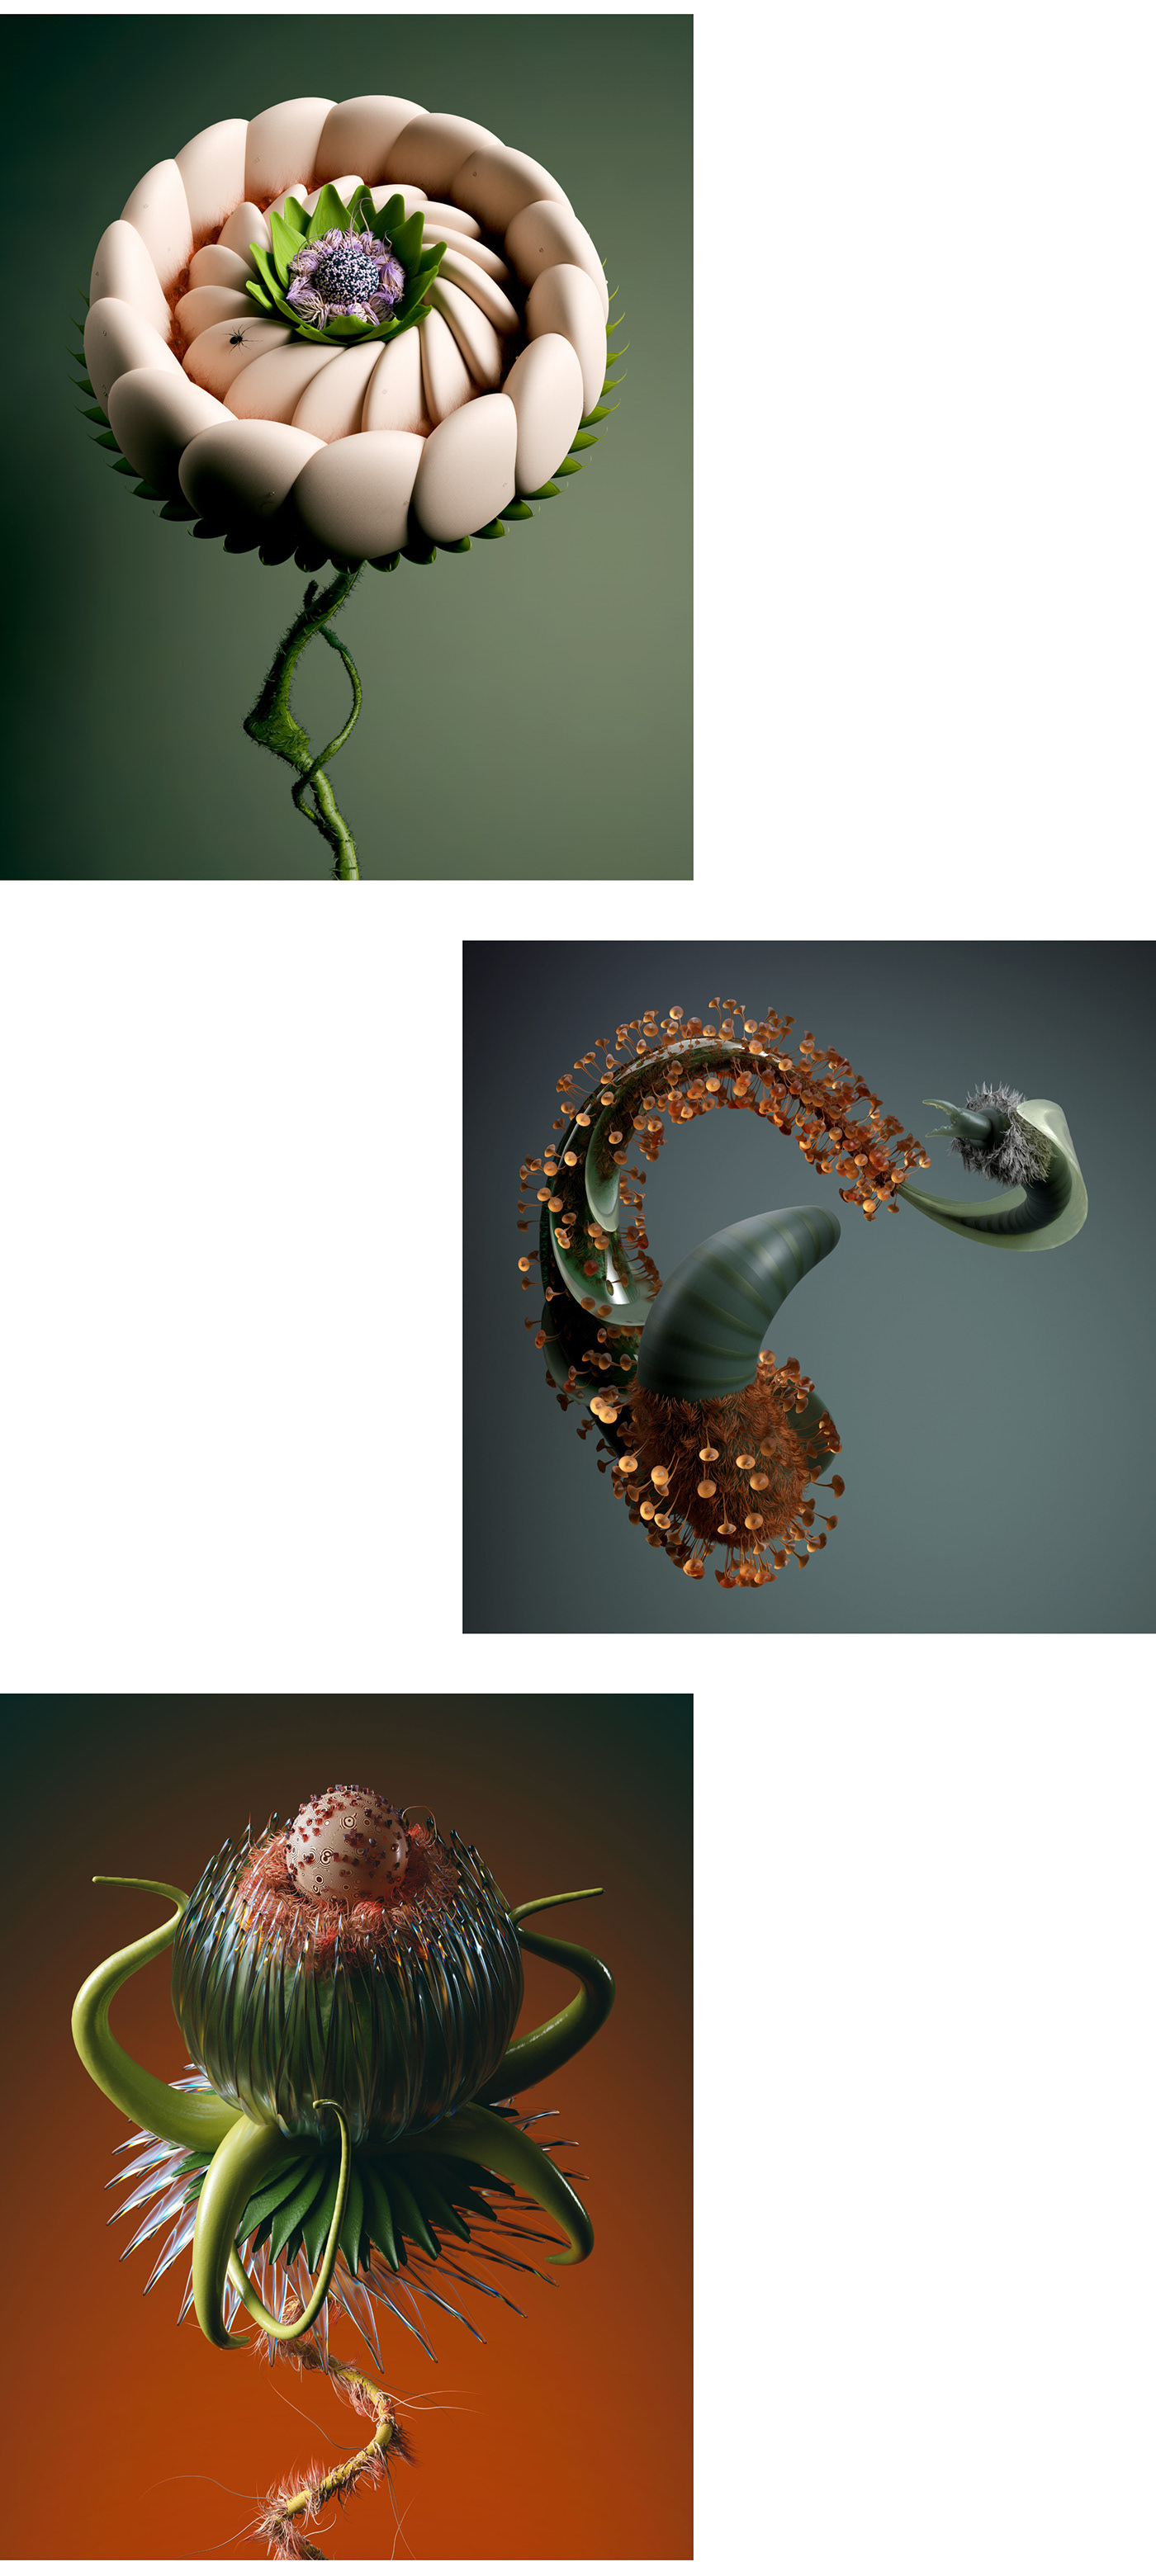 CGI 3D Render flower botanical plants research science biology anatomy